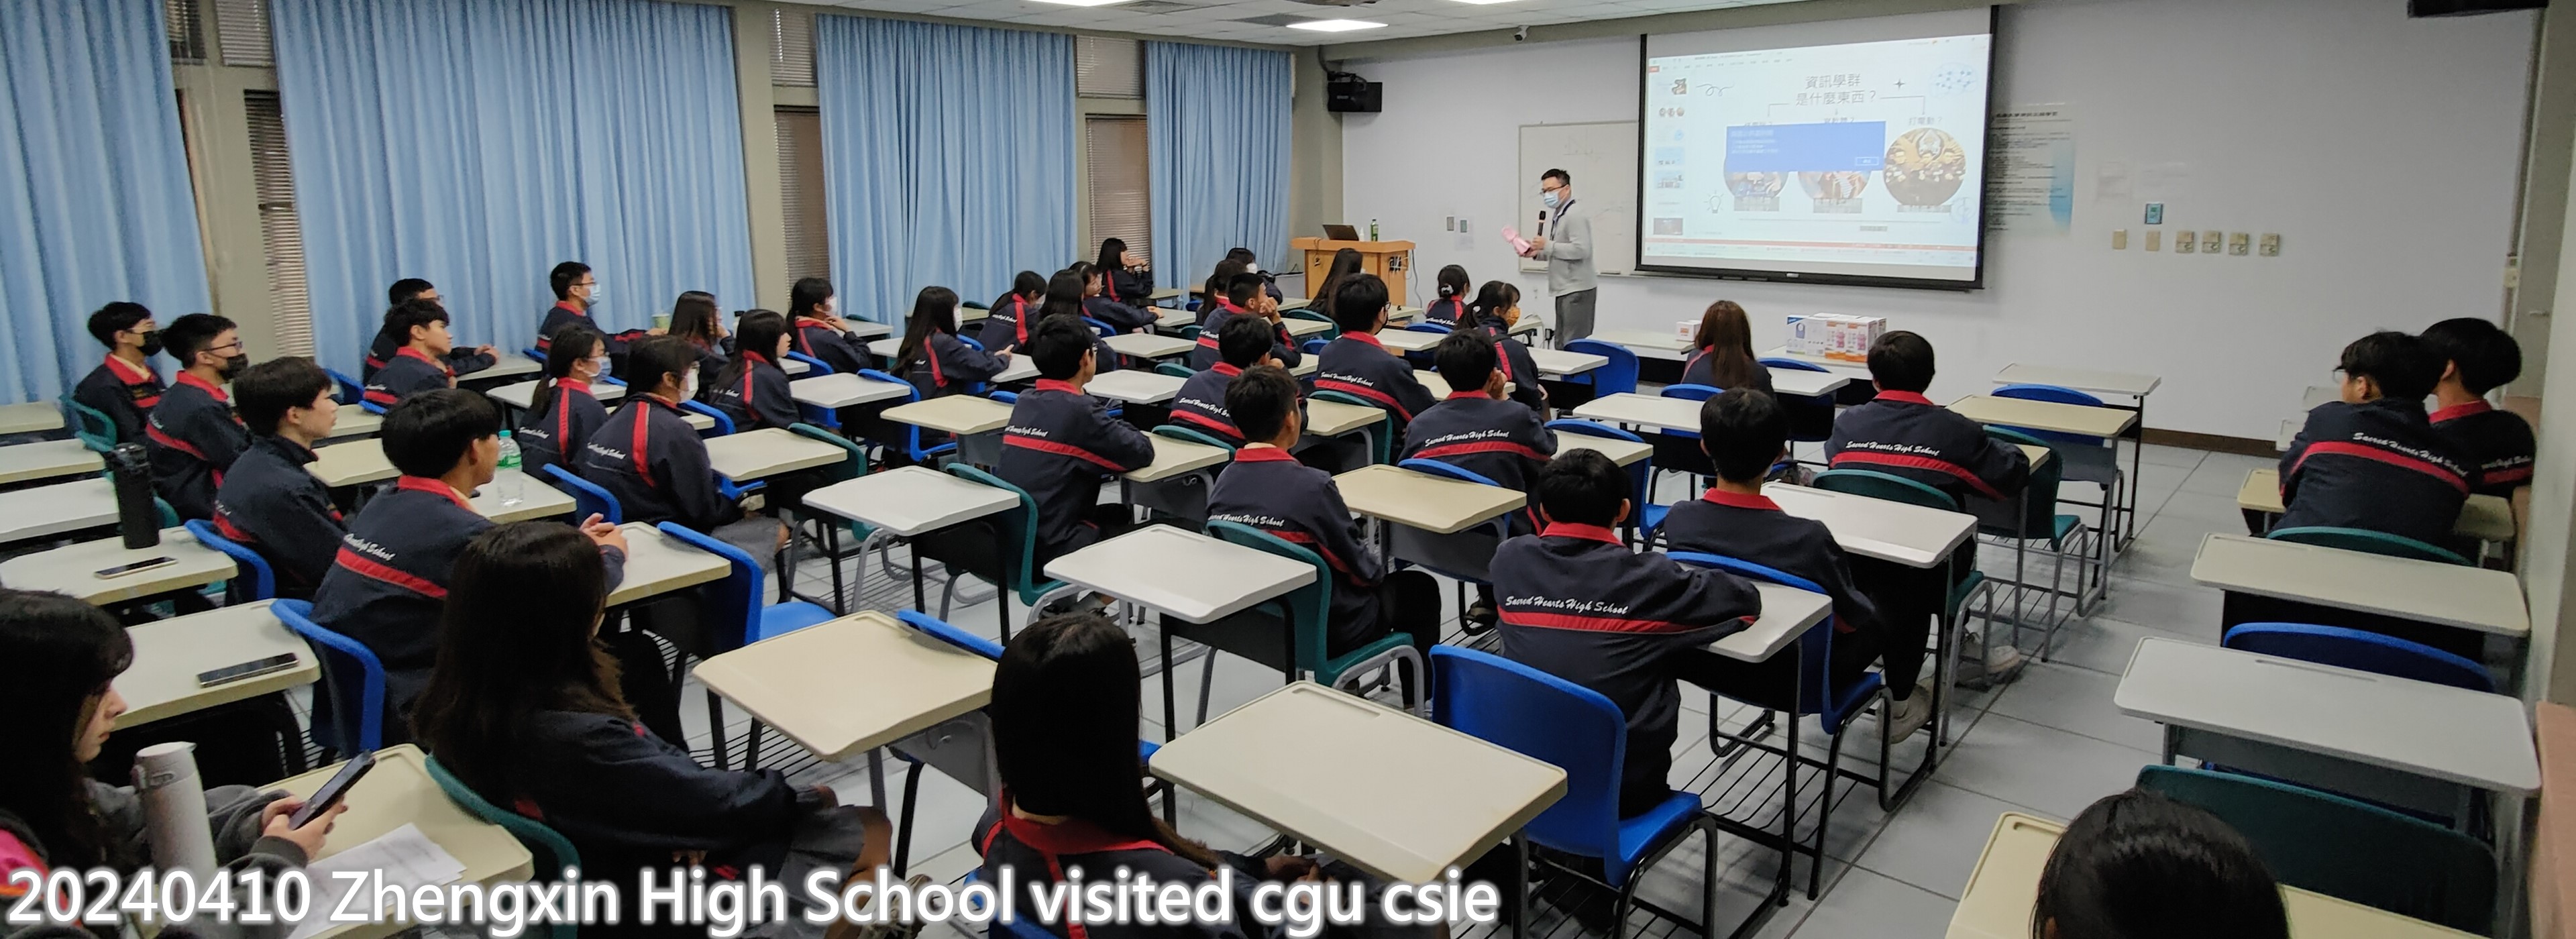 20240410 Zhengxin High School visited cgu csie